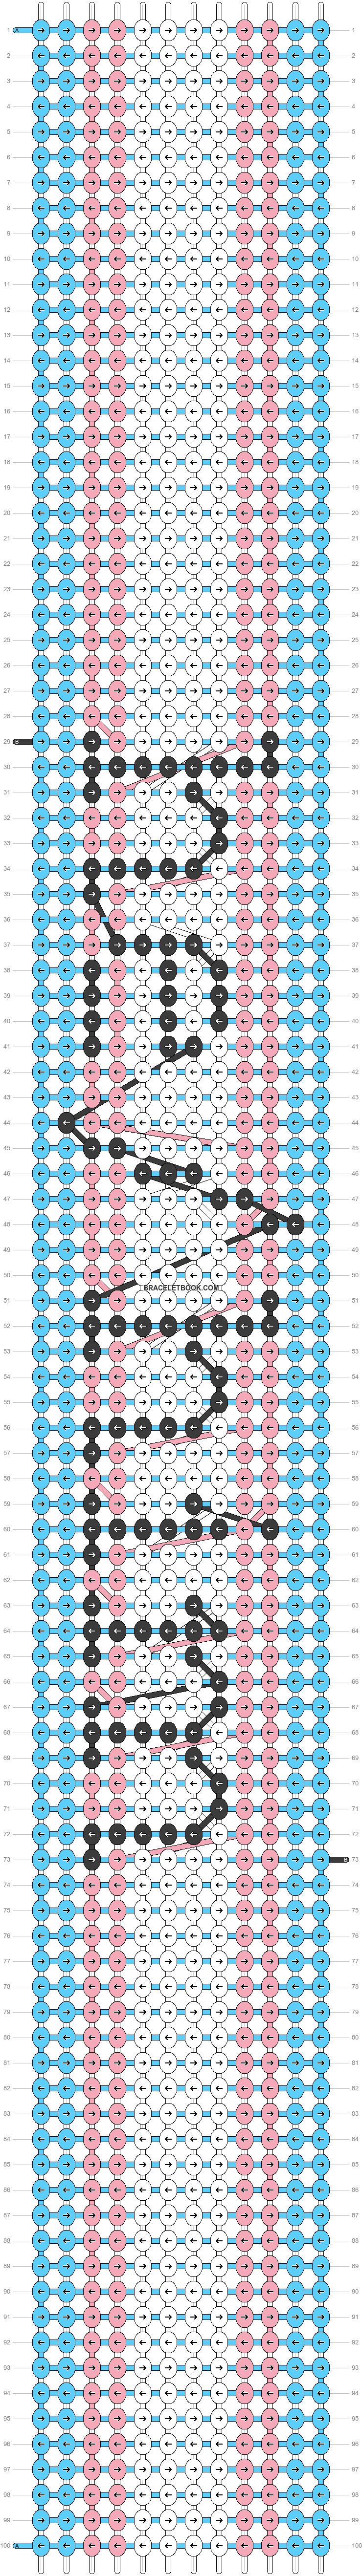 Alpha pattern #44322 variation #63696 pattern